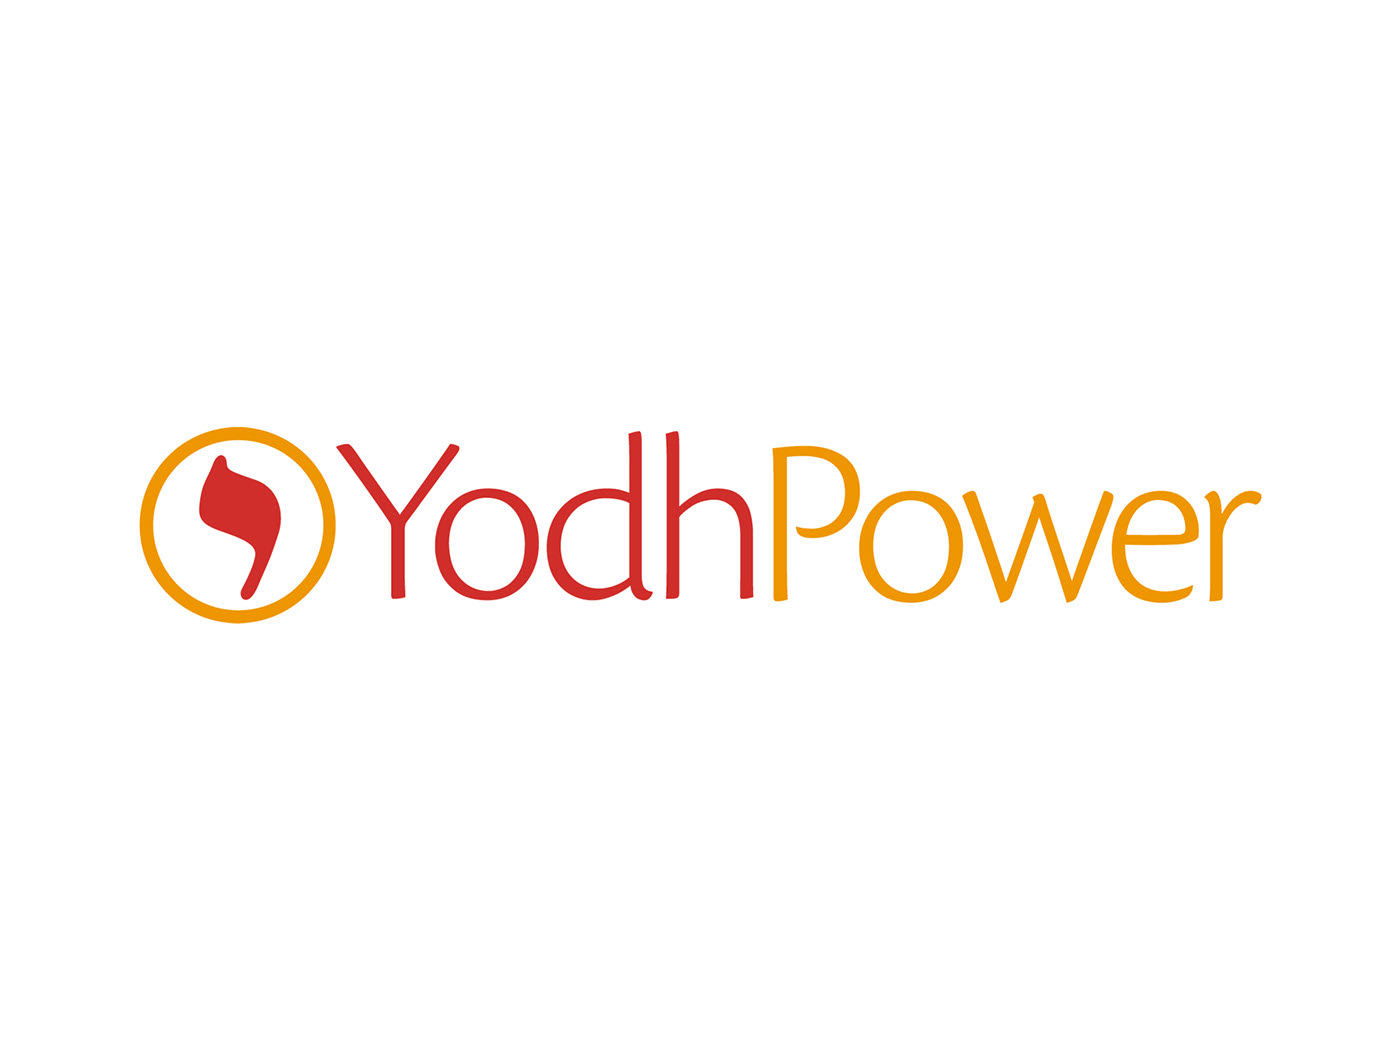 Yodh Power